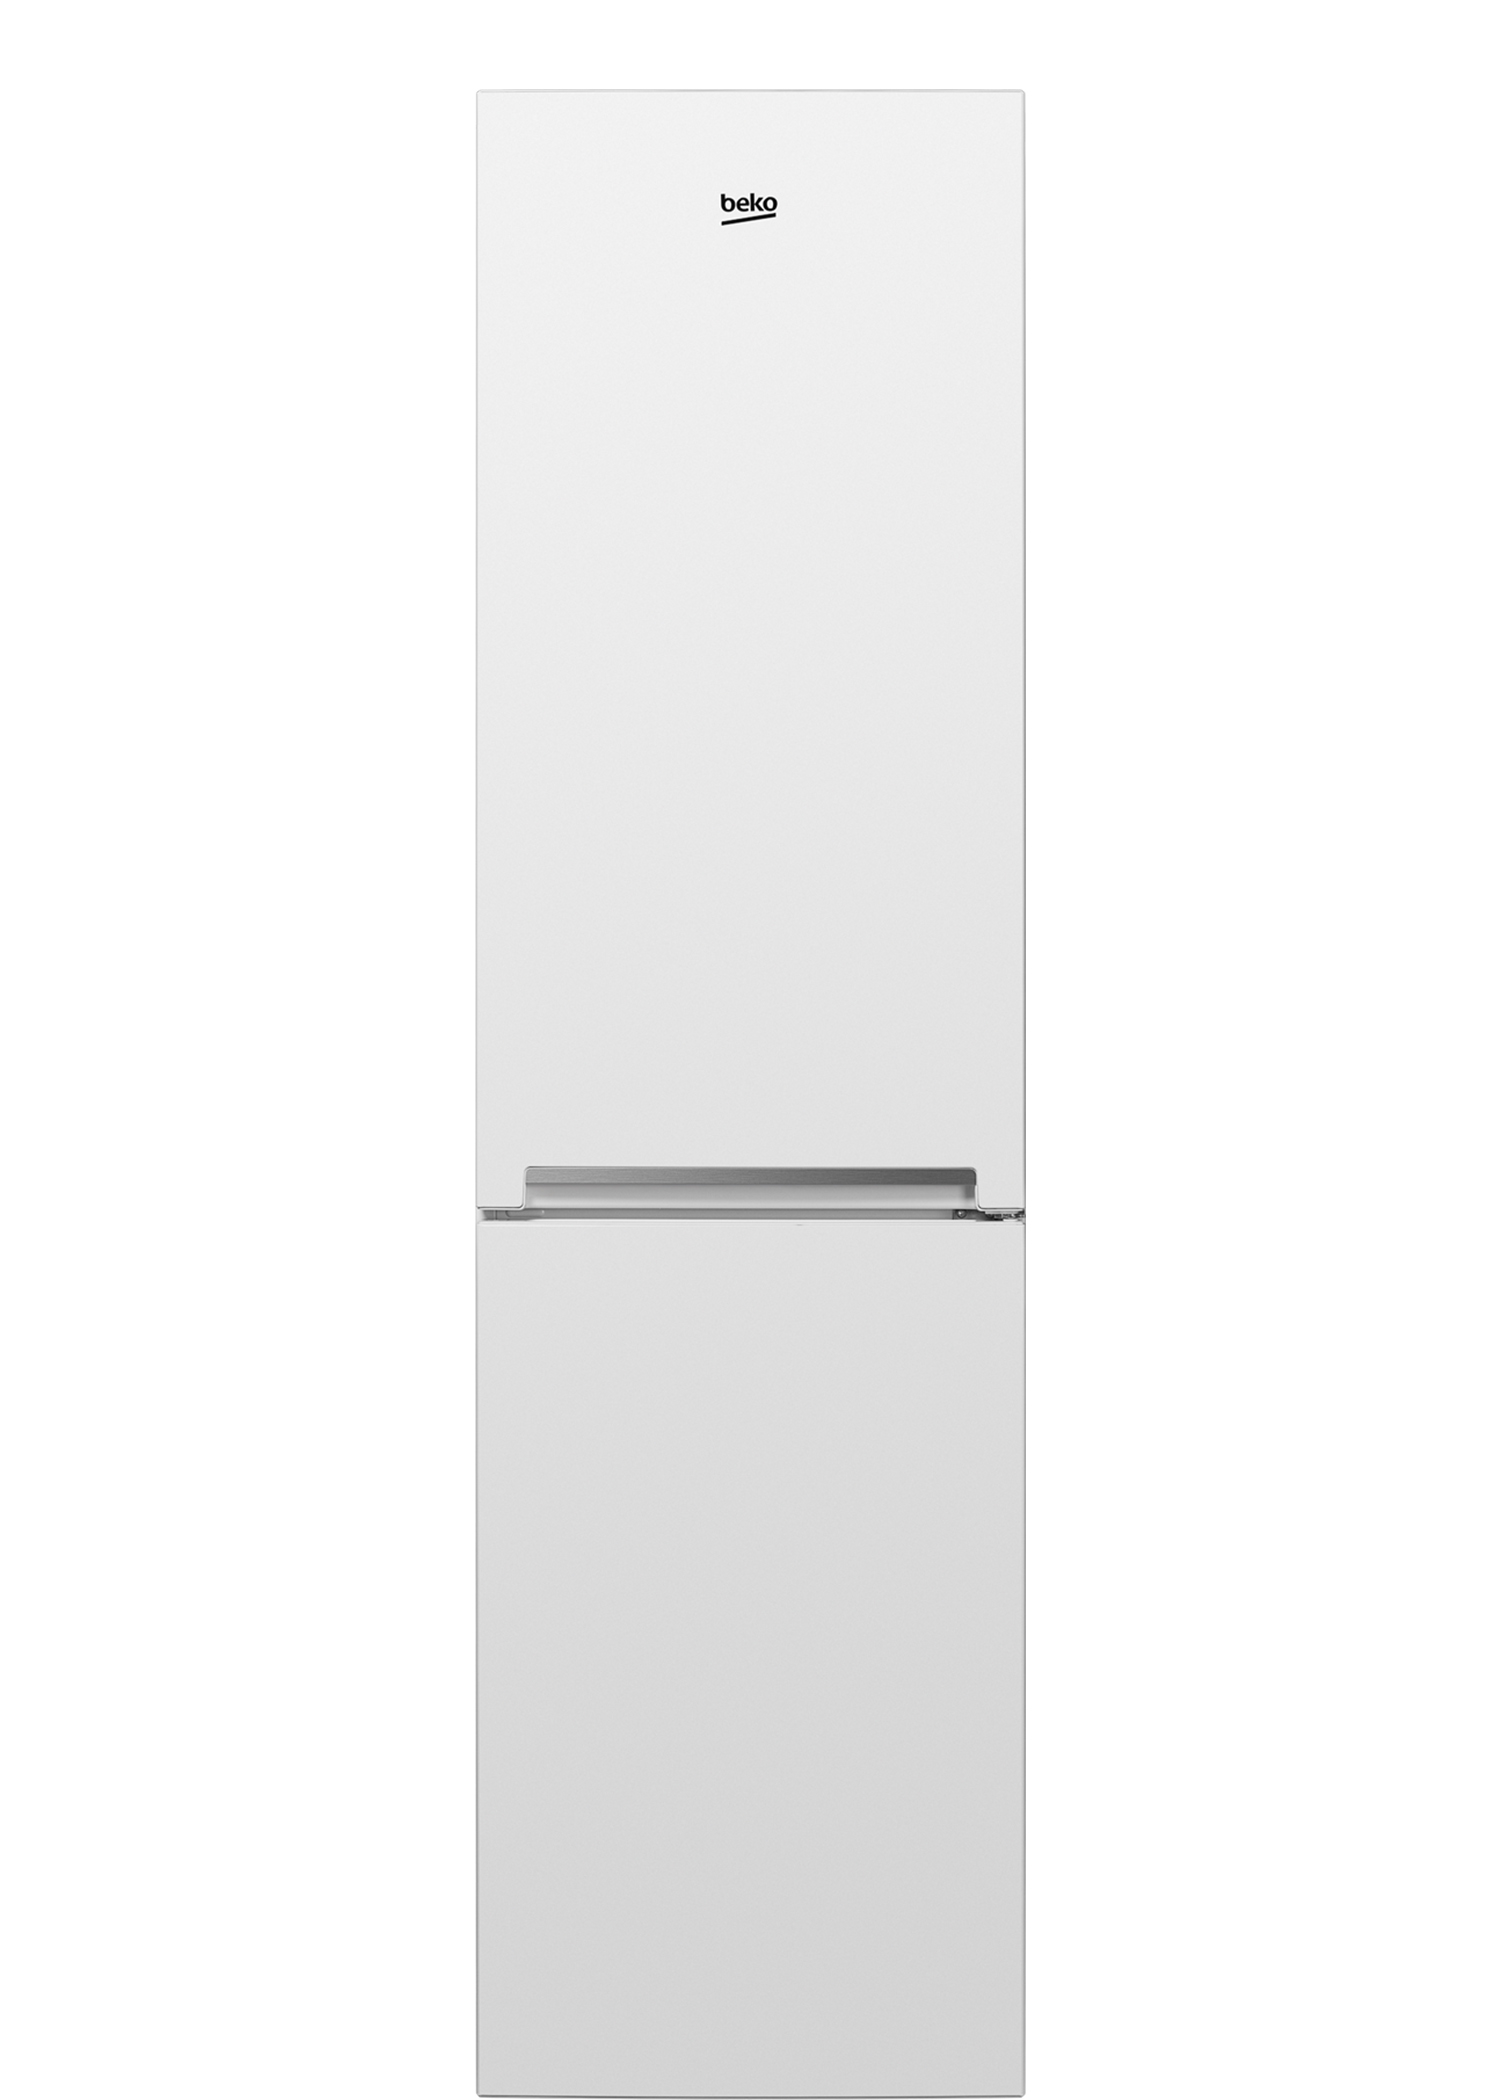 Холодильник Beko RCSK 335M20 W белый холодильник двухкамерный beko rcnk310kc0w 184x60x54см 1 компрессор белый